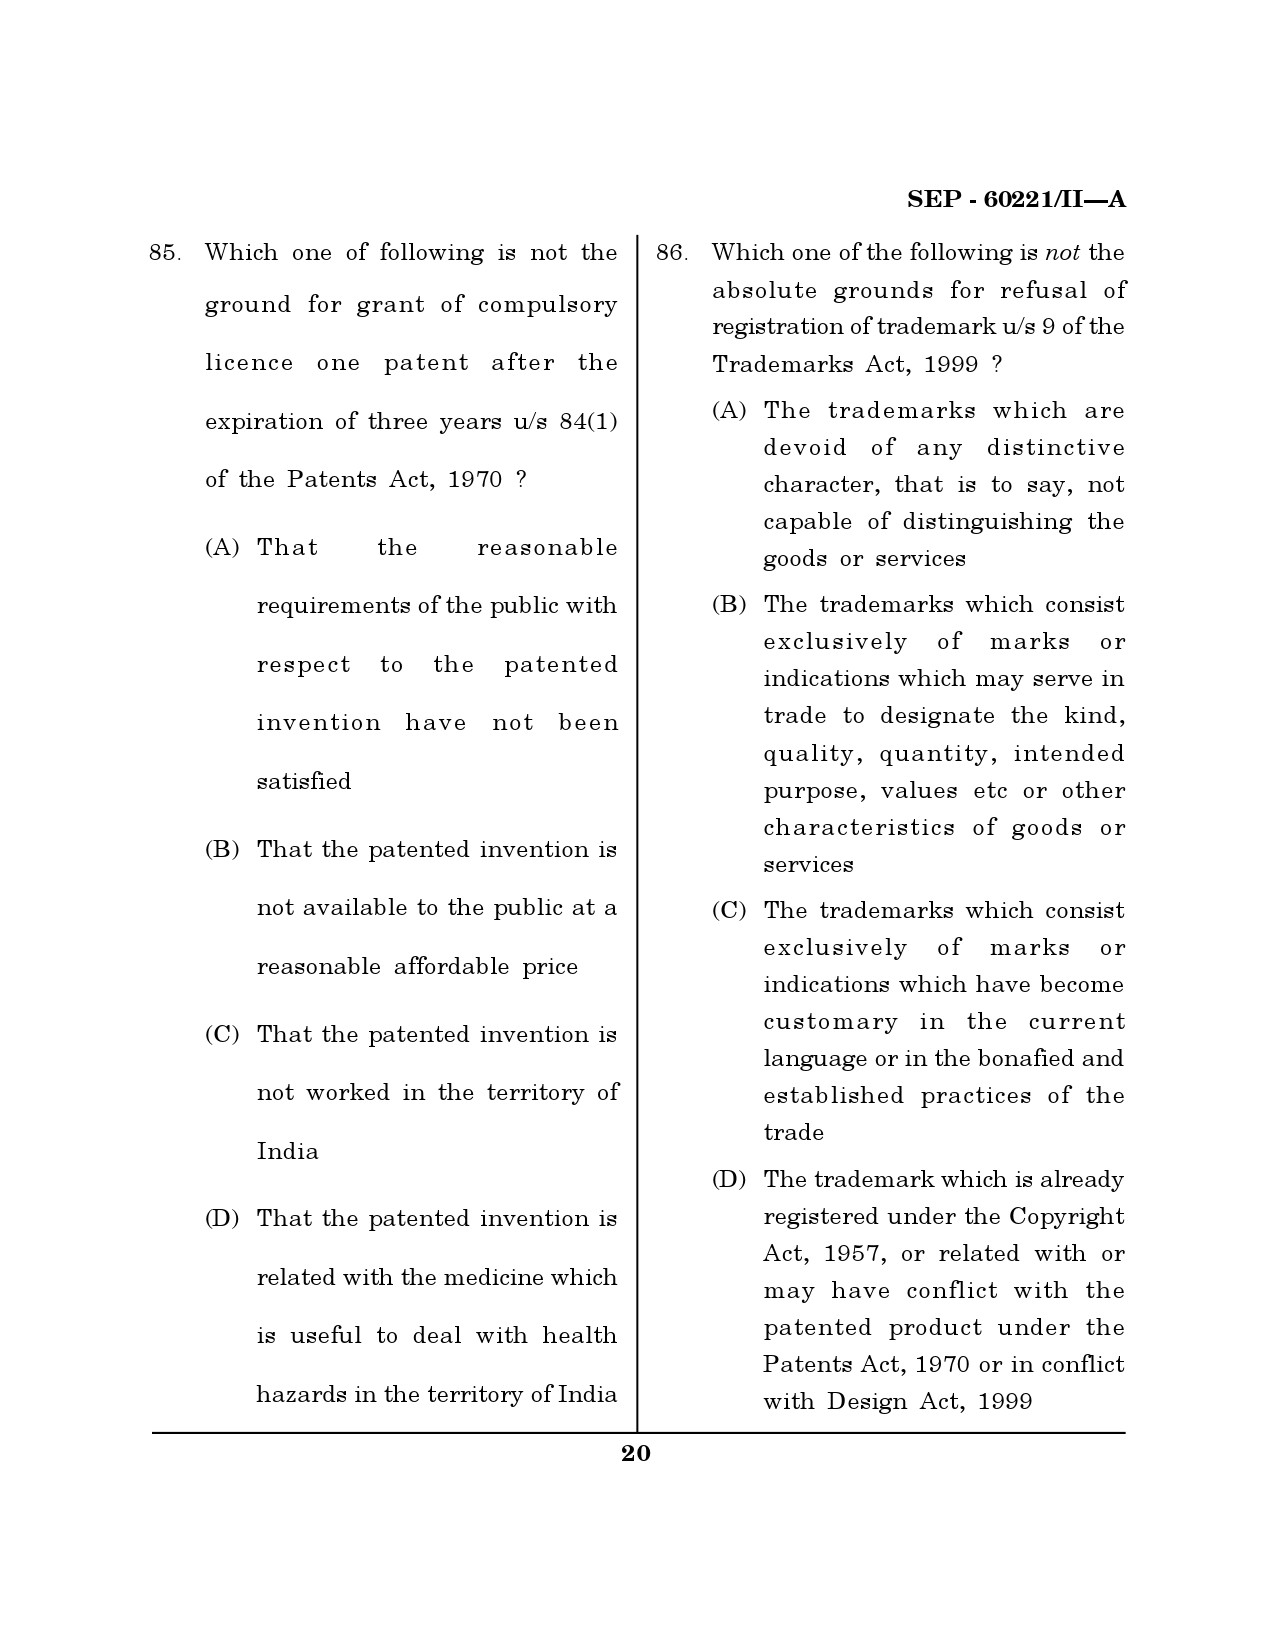 Maharashtra SET Law Exam Question Paper September 2021 19